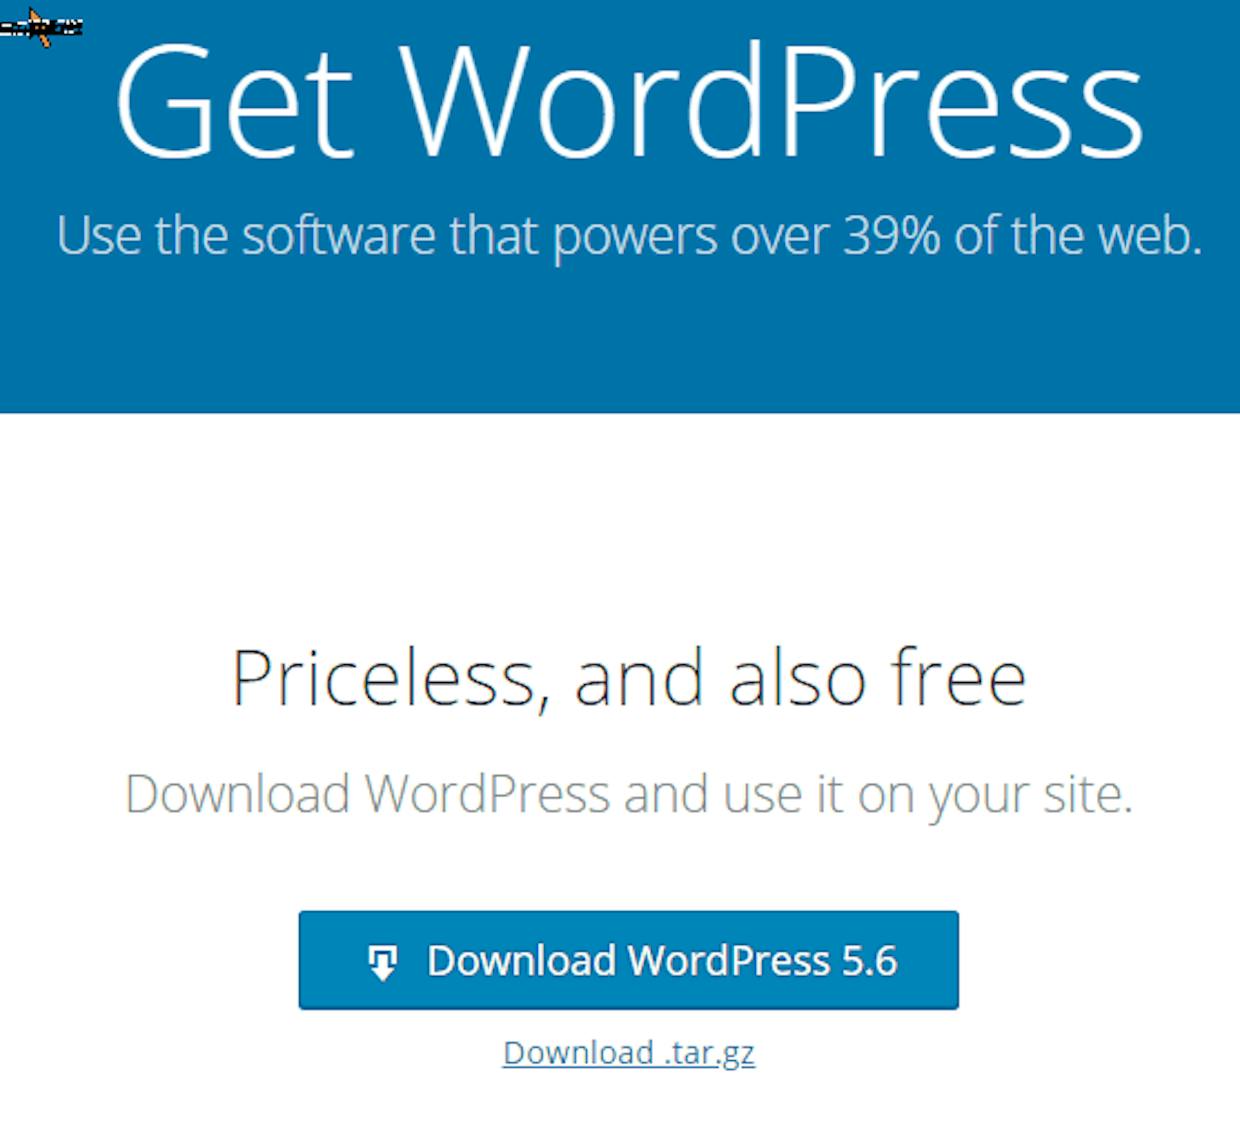 Ấn vào download Wordpress 5.6